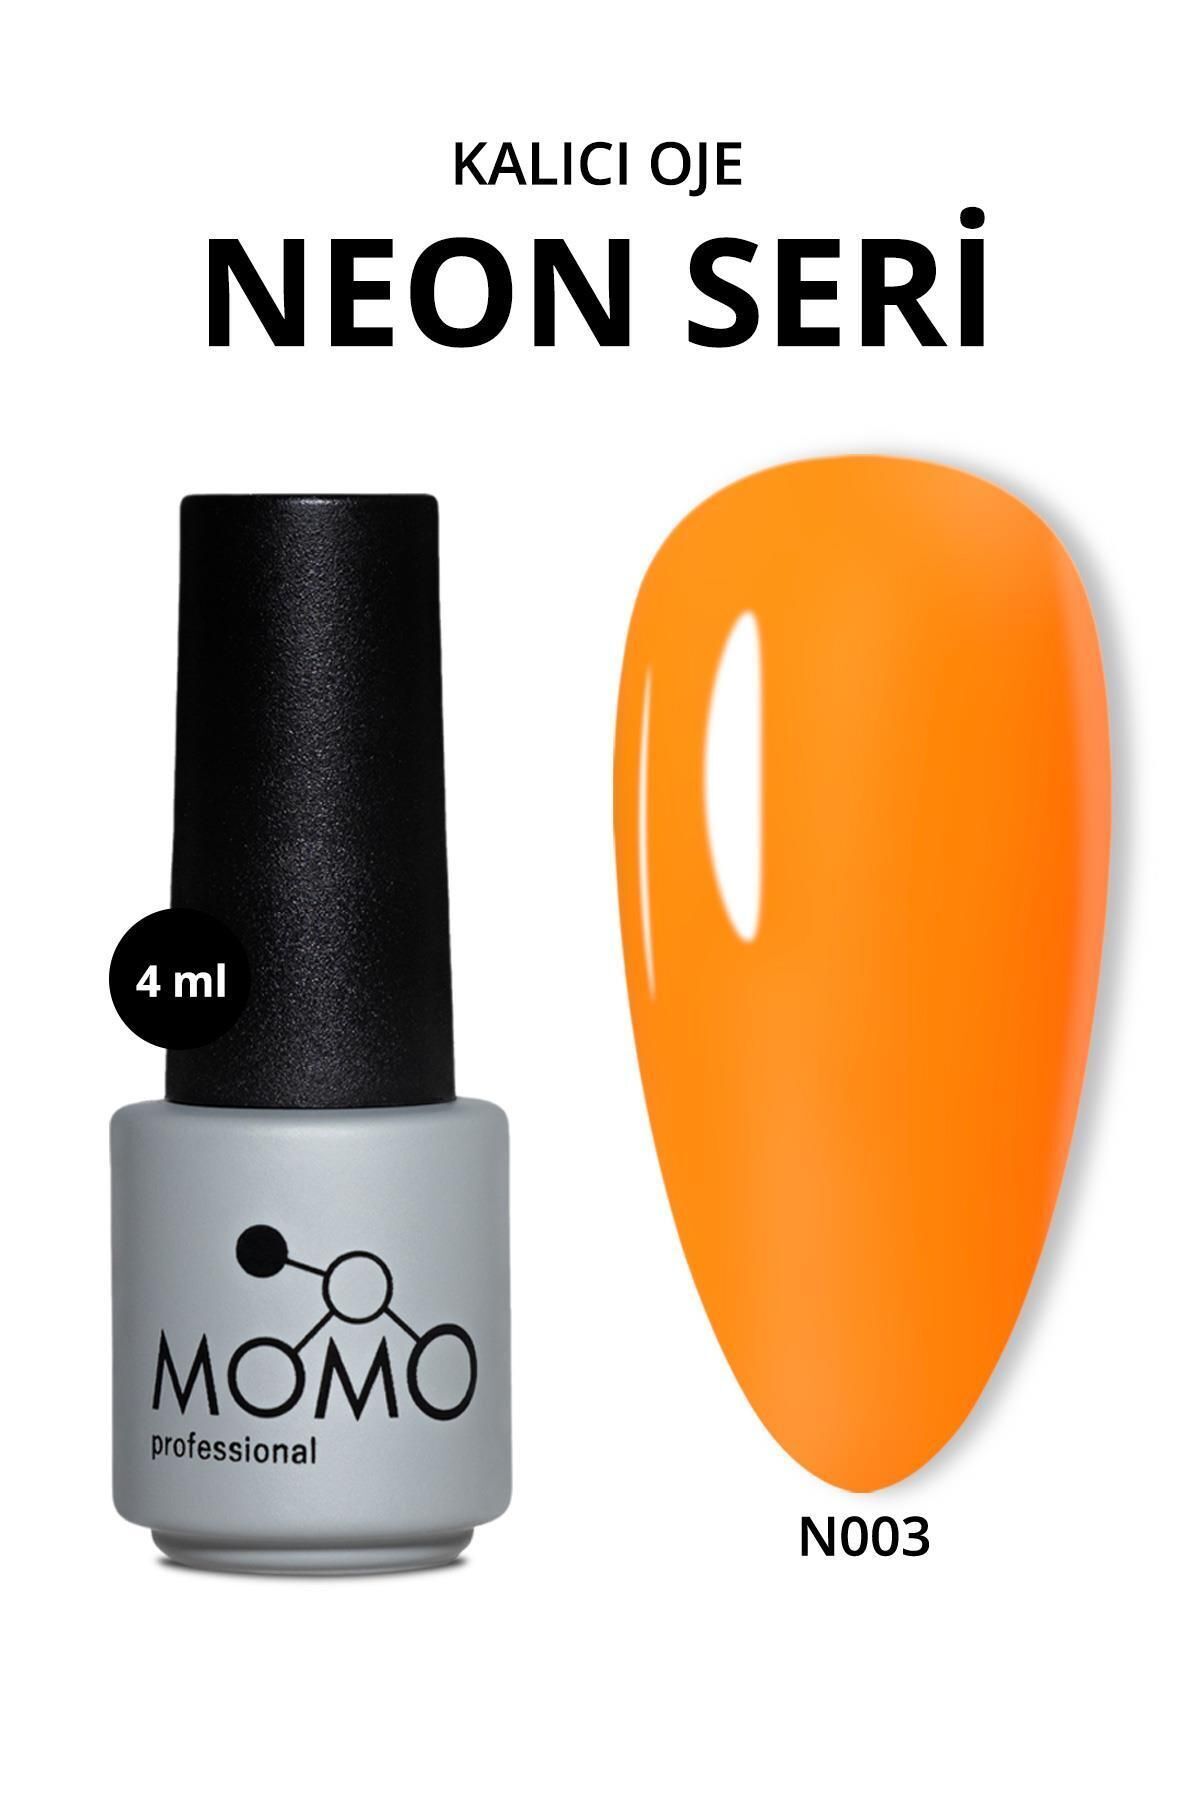 MOMO professional Kalıcı Oje N003, Neon Turuncu, 4 ml